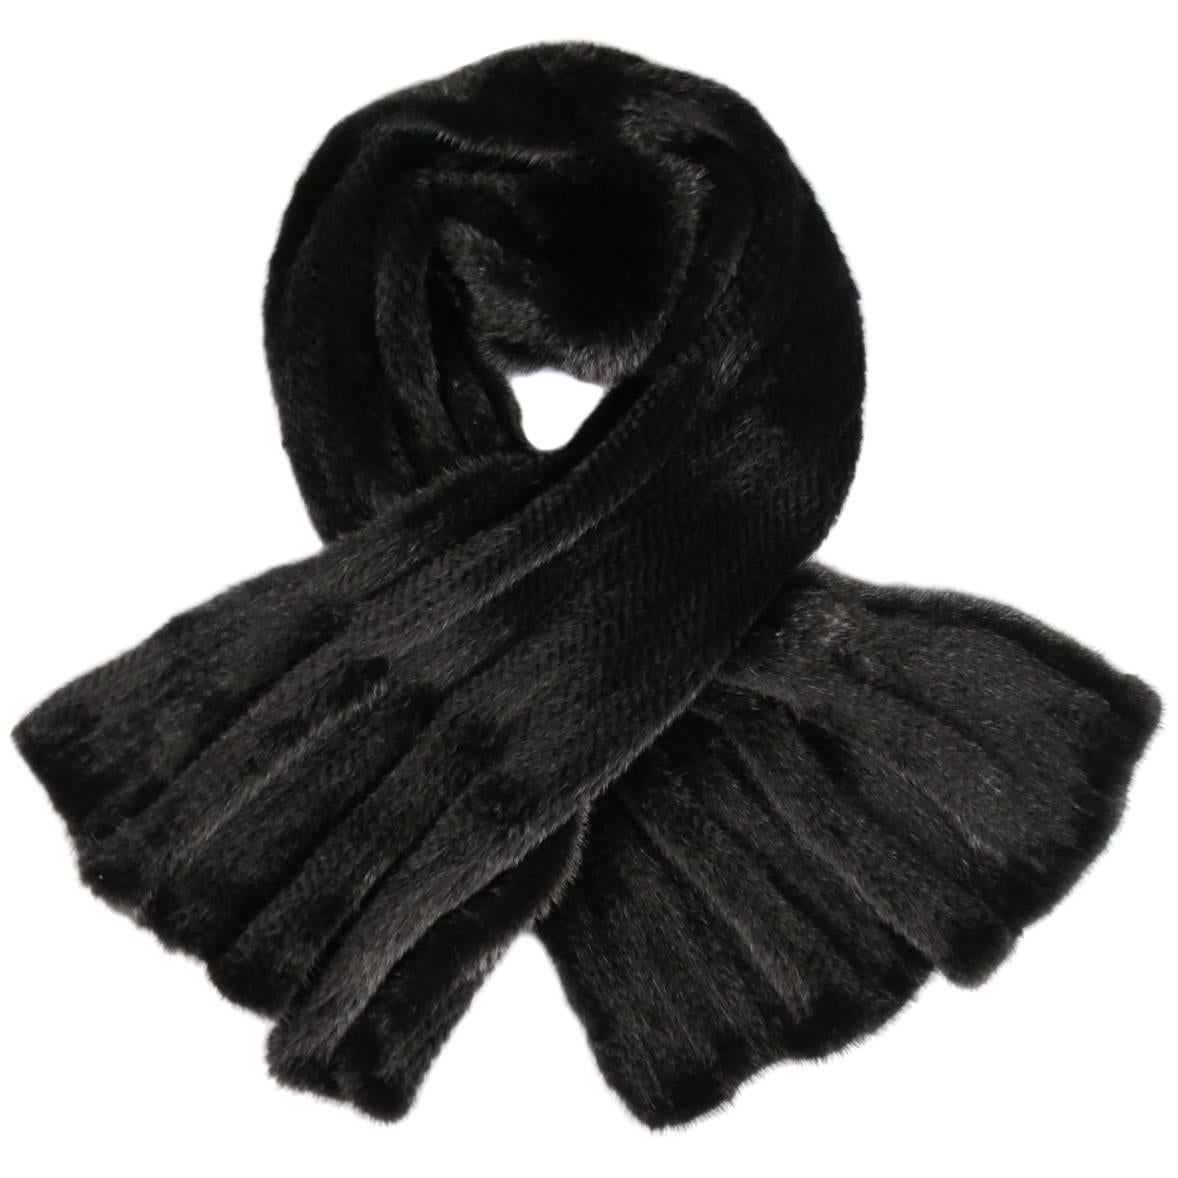 SAKS FIFTH AVENUE Fur Salon Black Knitted Mink Fur Scarf Shawl